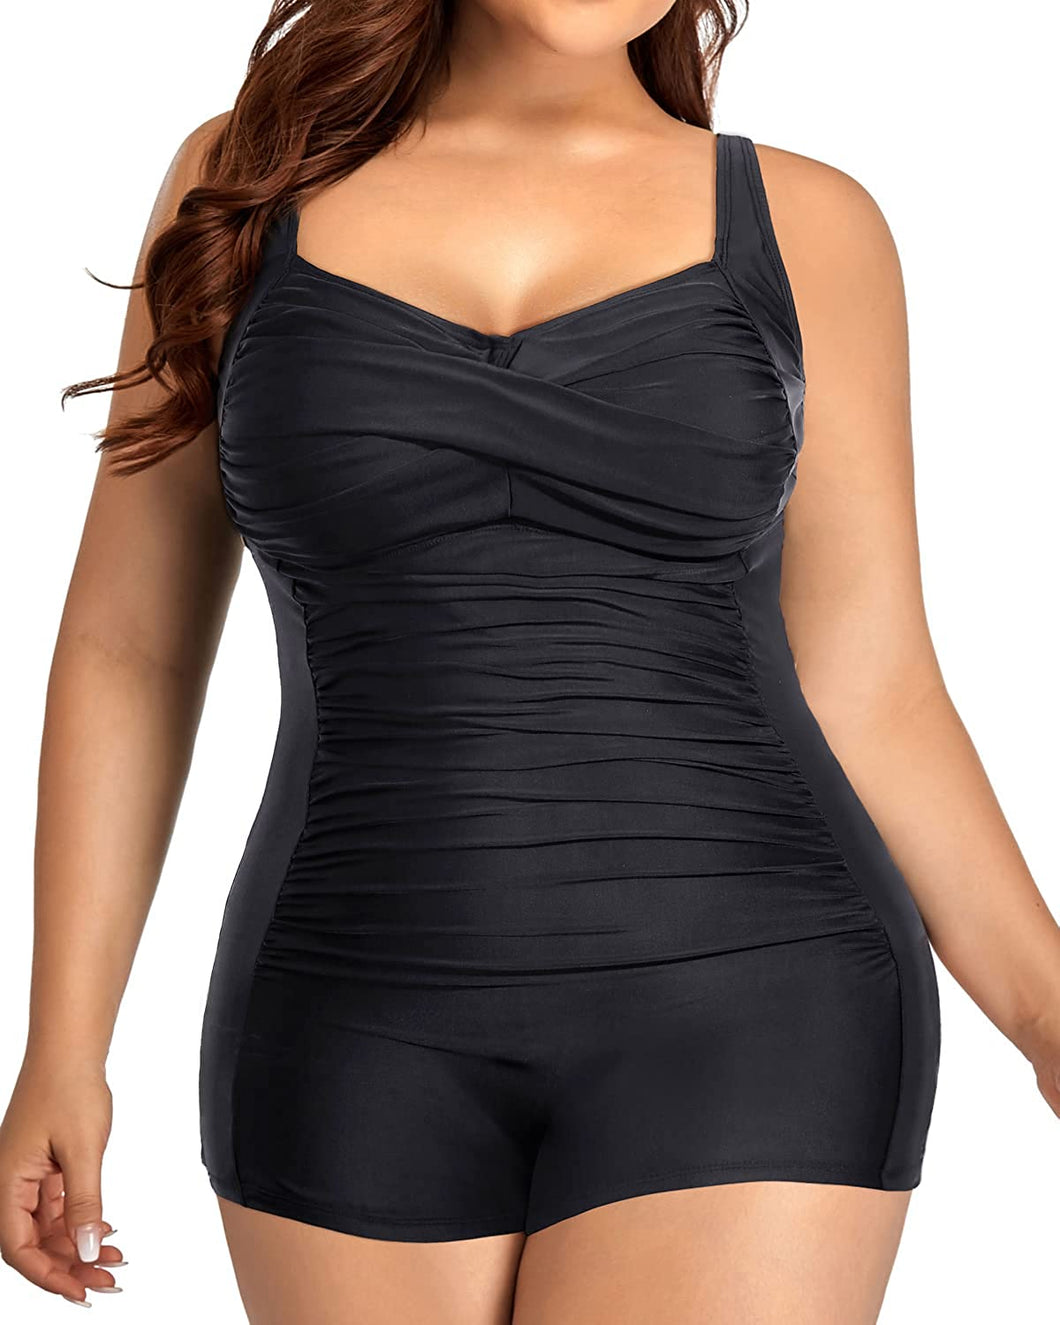 Santorini Black Plus Size One Piece Tummy Control Ruched Swimsuit